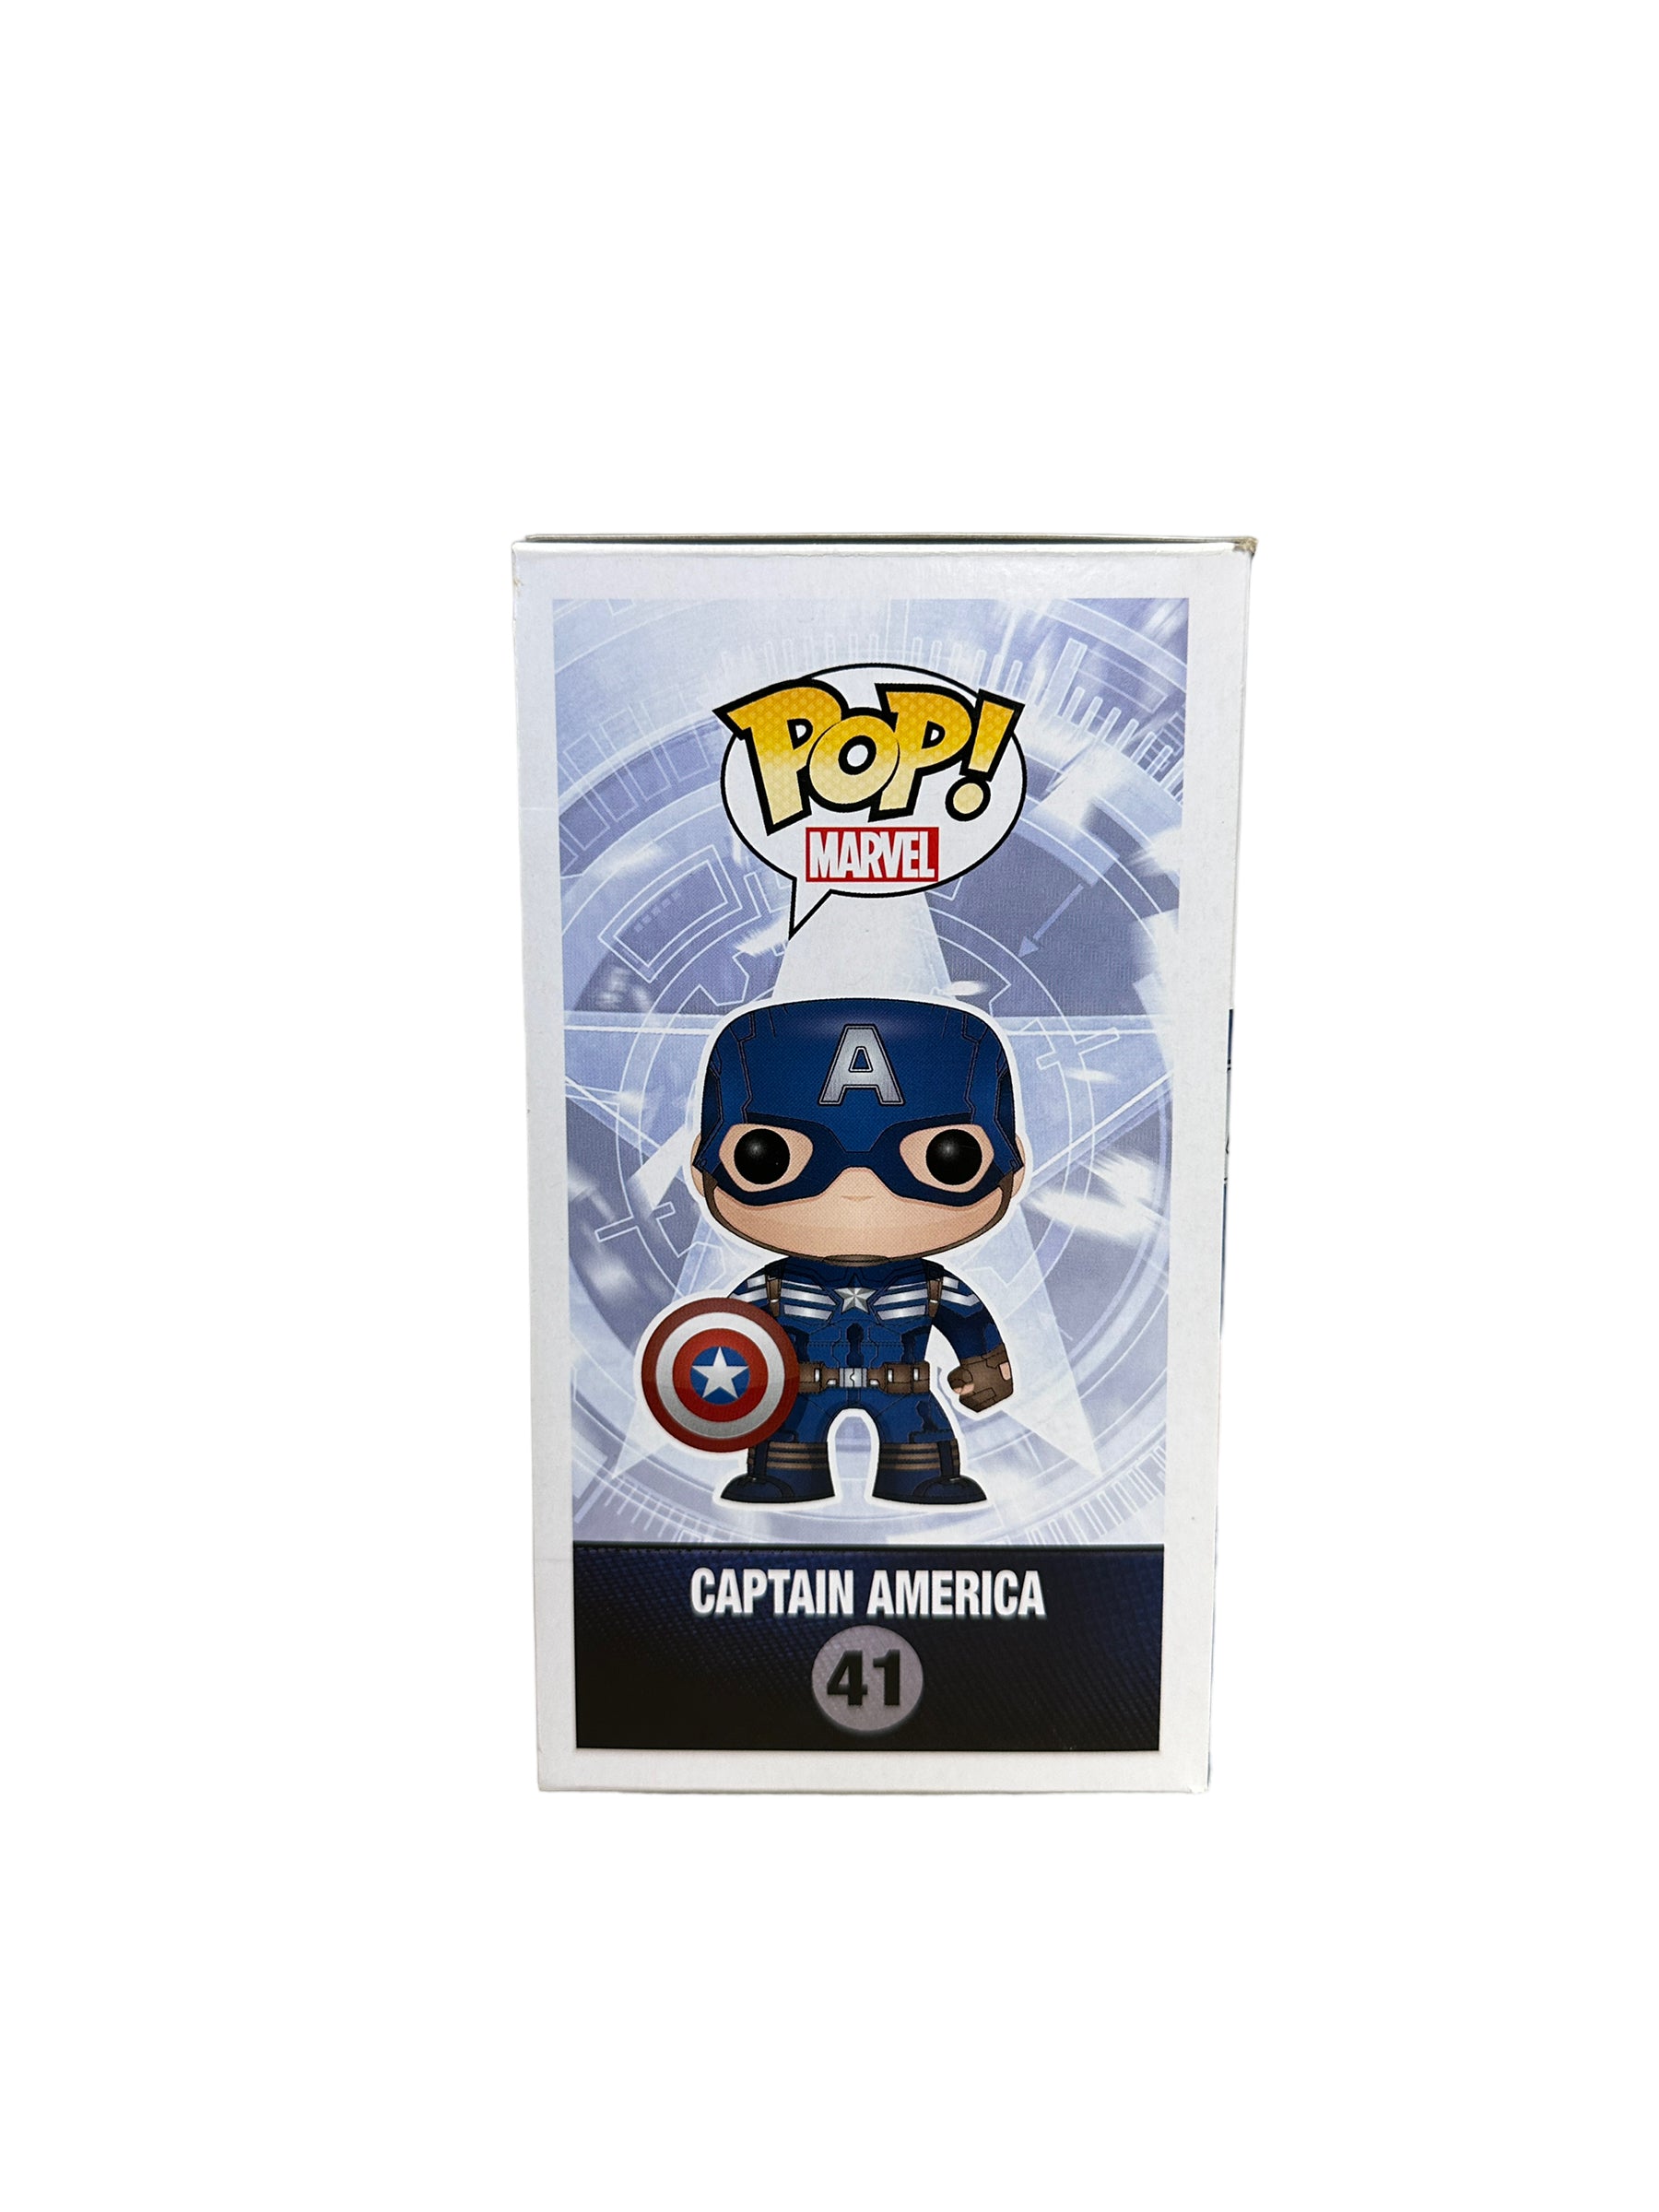 Captain America #41 (Black and White) Funko Pop! - Captain America The Winter Soldier - Barnes and Noble Exclusive - Condition 7/10